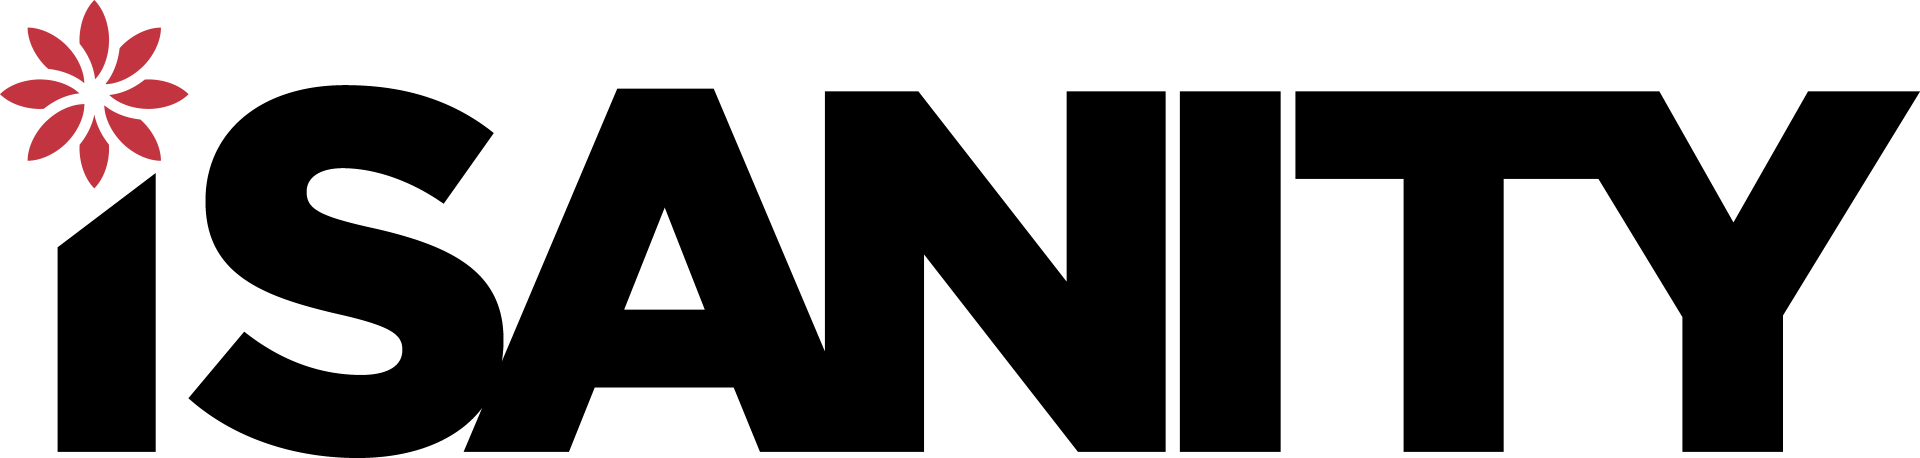 logo isanity originale